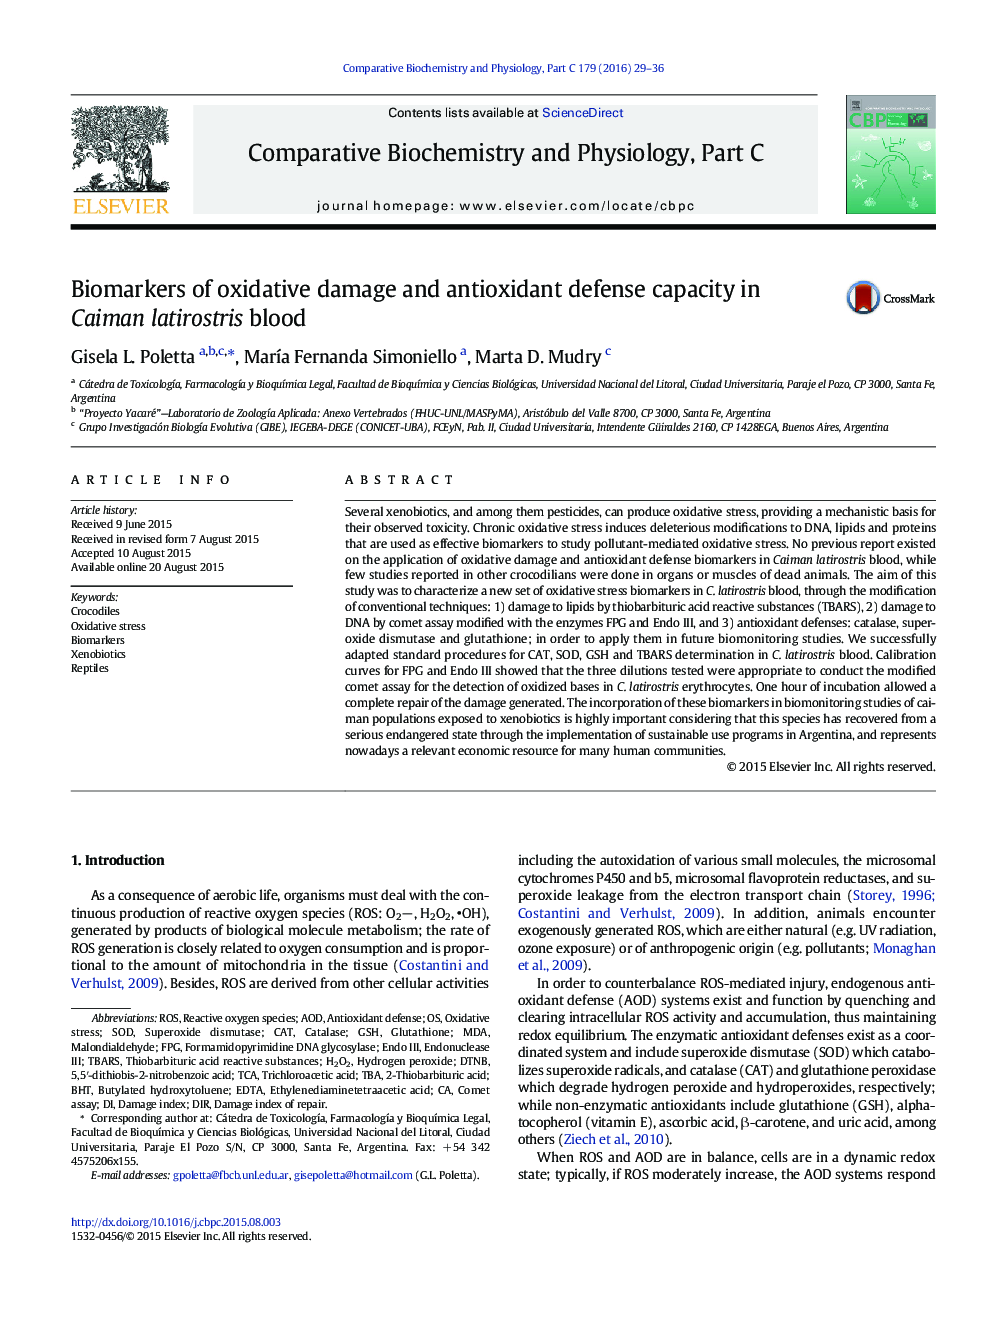 Biomarkers of oxidative damage and antioxidant defense capacity in Caiman latirostris blood